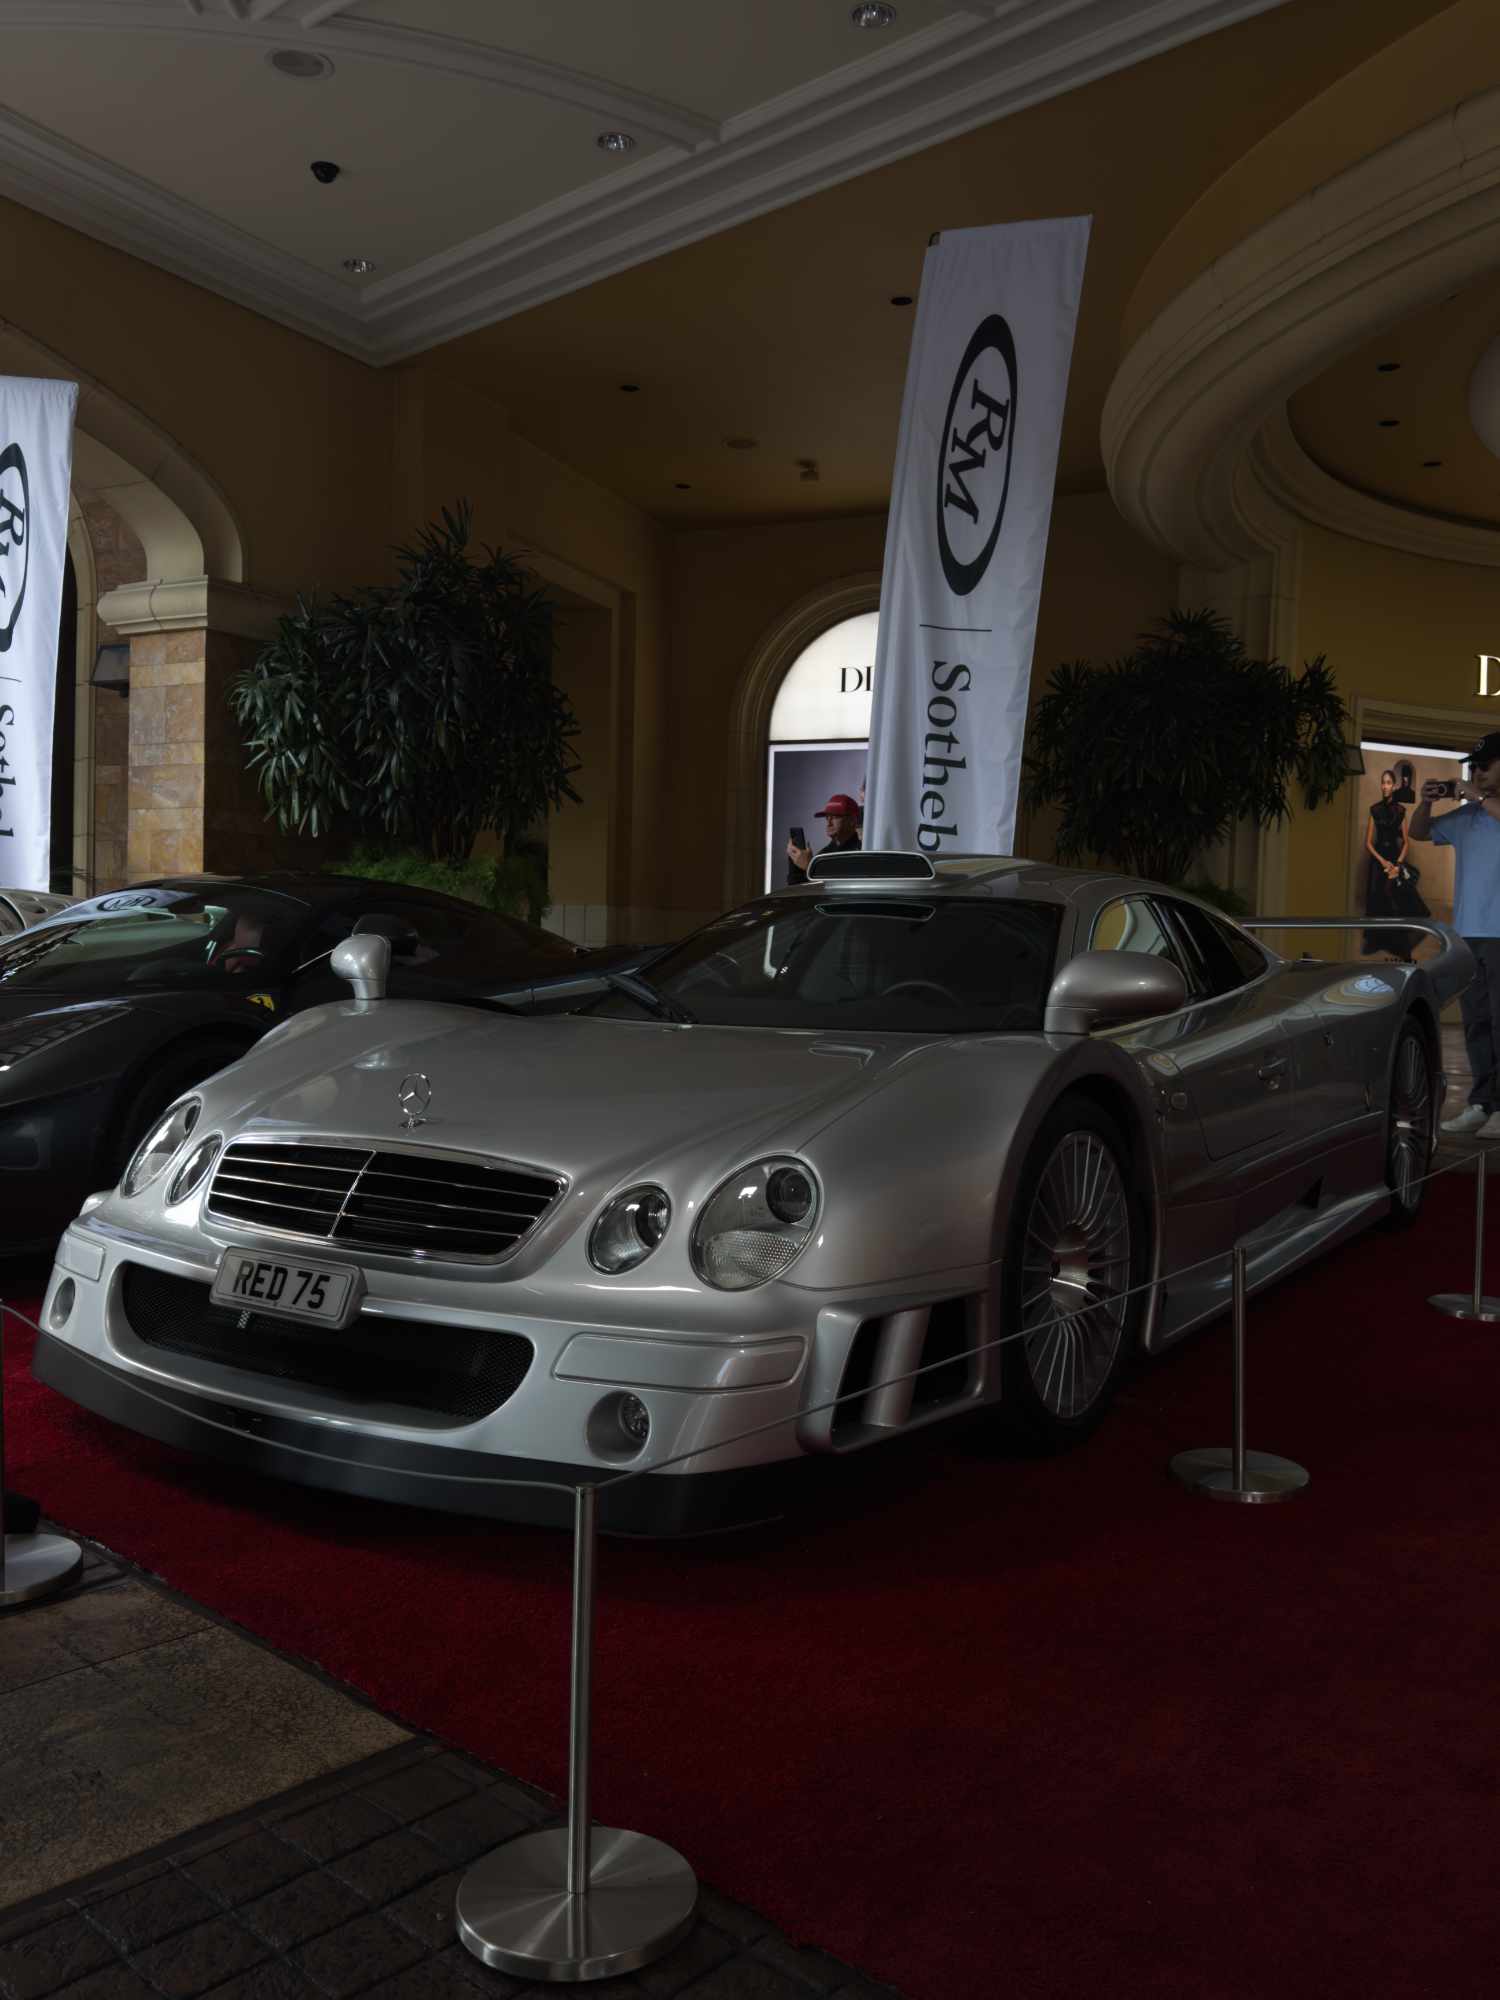 Cars from Sotheby's F1 Las Vegas Grand Prix automotive auction